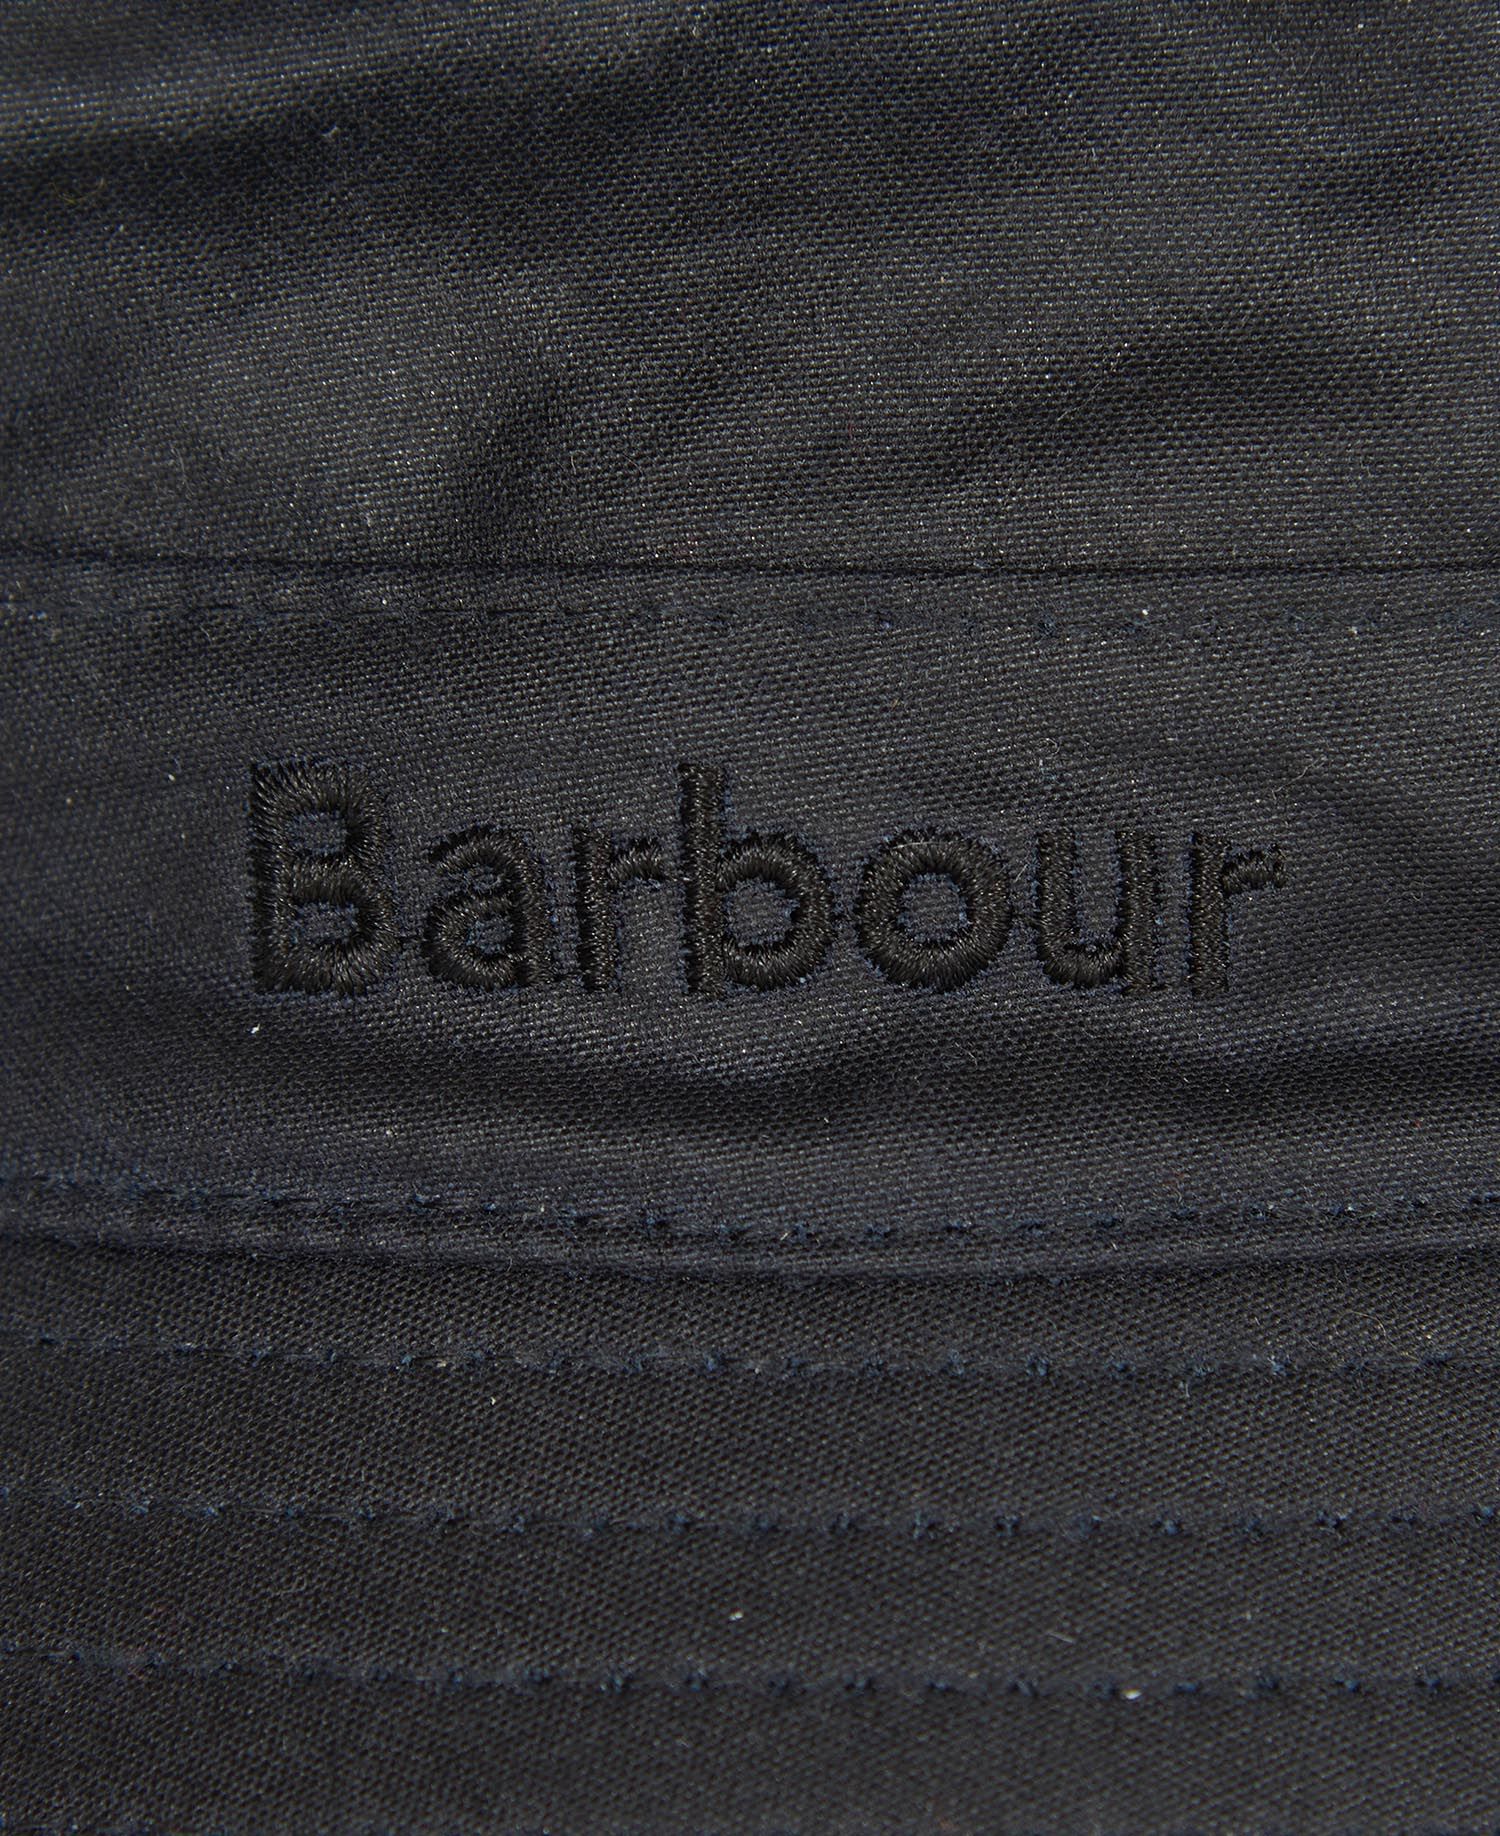 Barbour Wax Sports Hat in Navy | Barbour